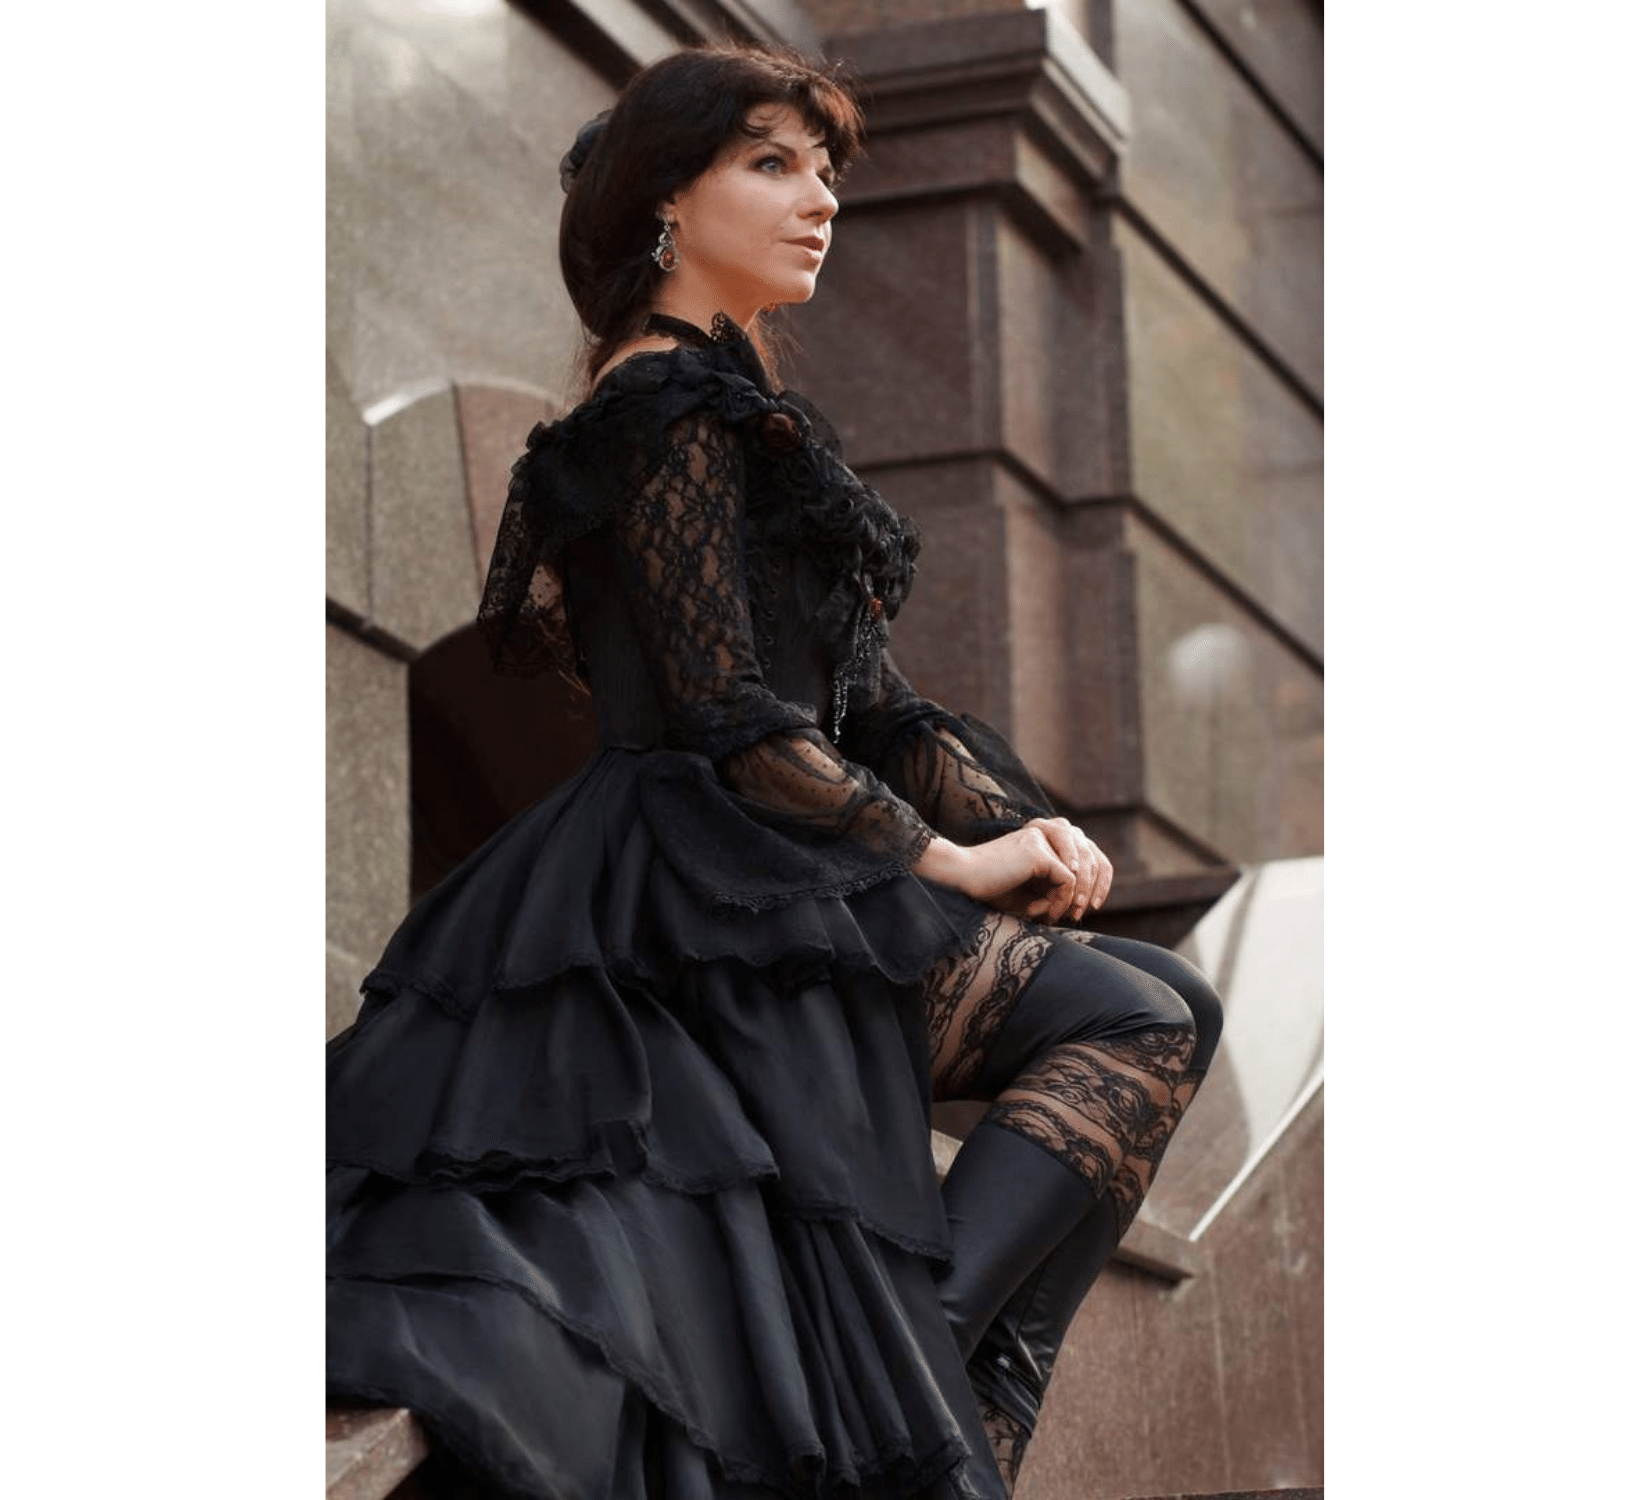 Fantasy gothic rococo inspired black wedding atlas dress